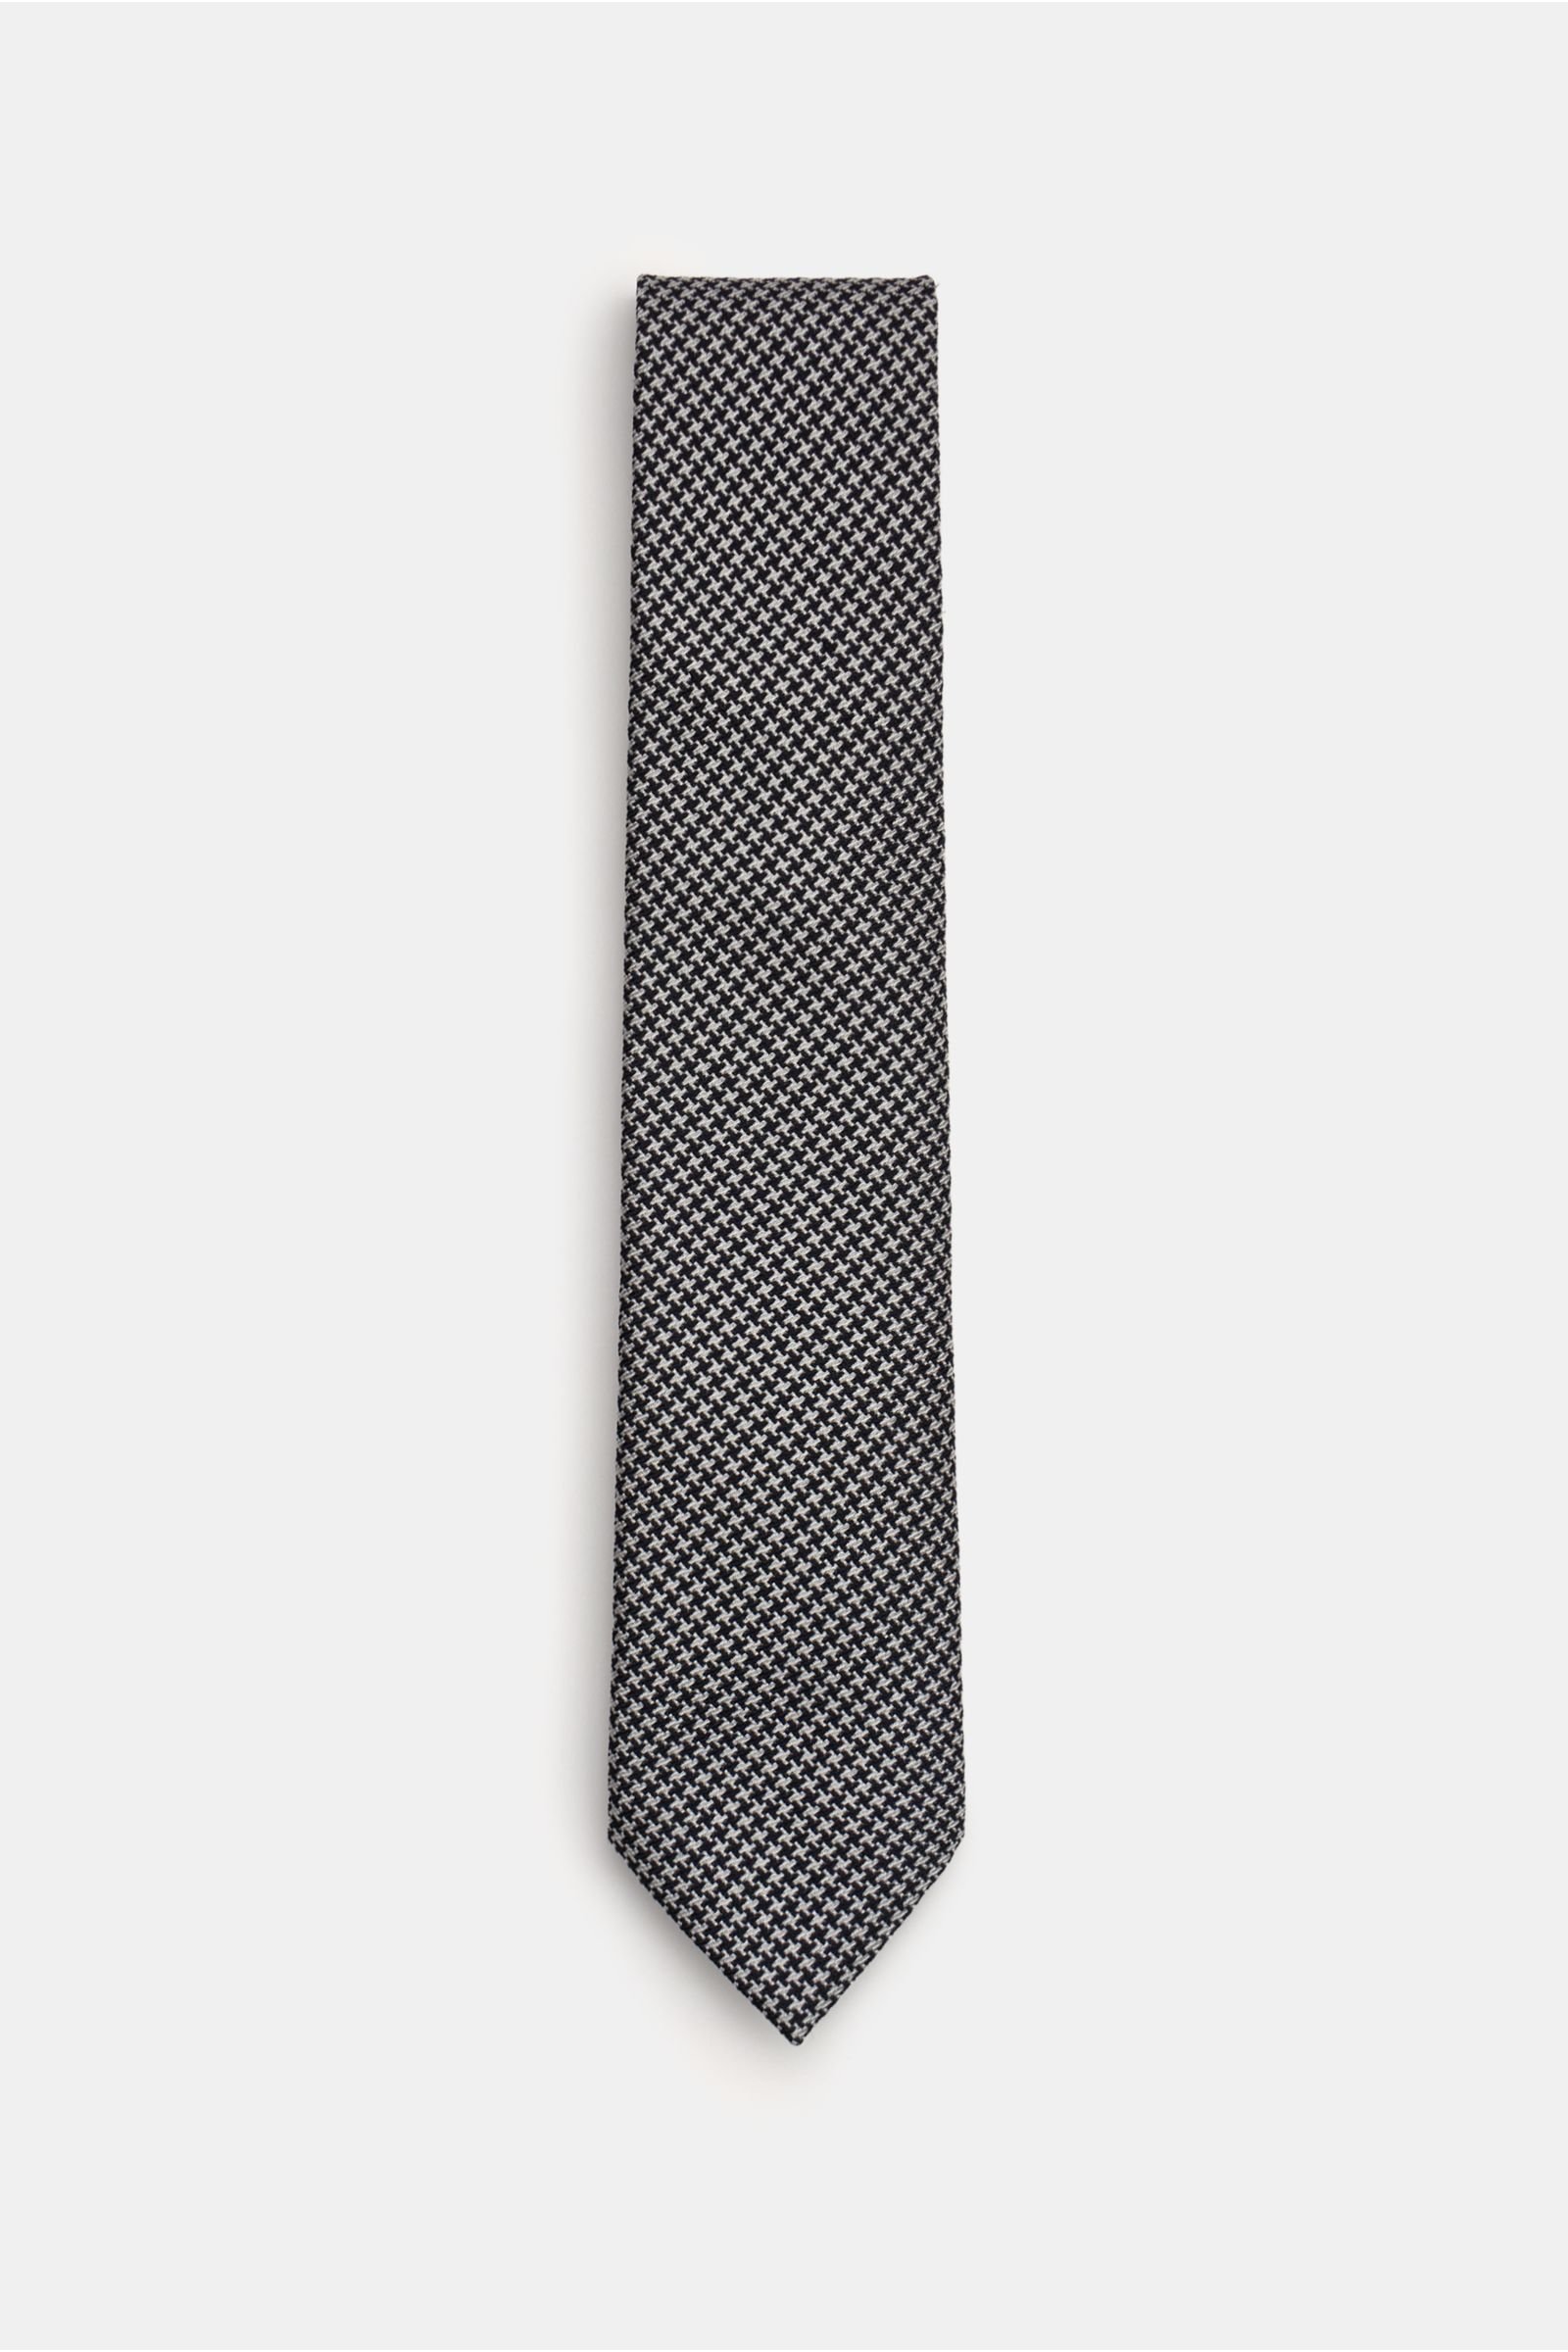 Tie dark navy/light grey checked